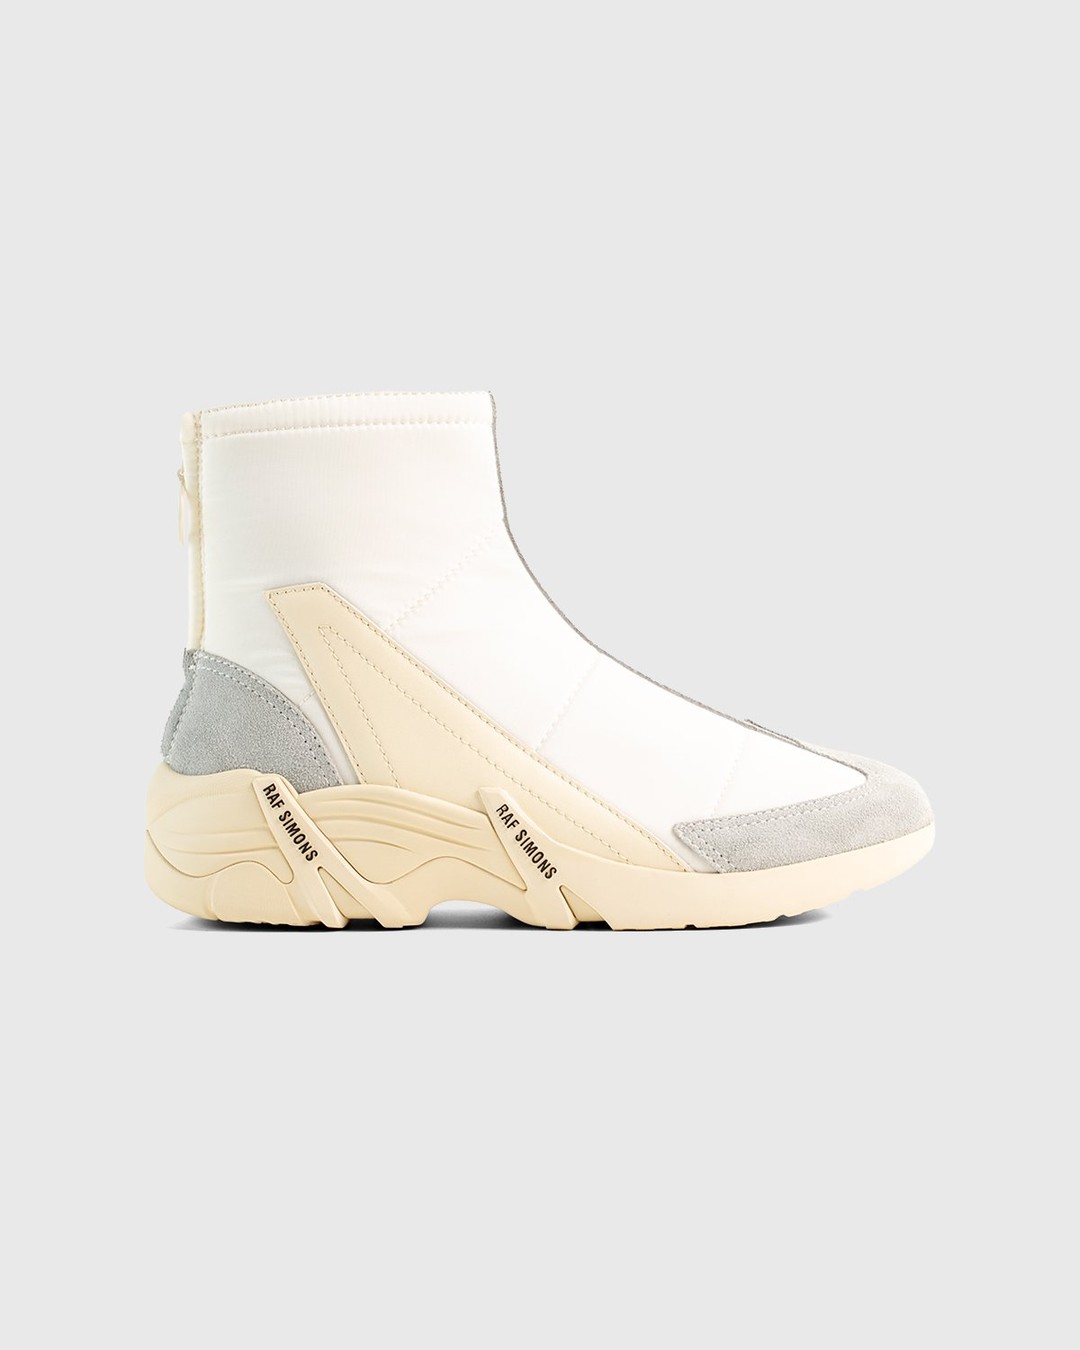 Raf Simons – Cylon 22 Cream - High Top Sneakers - Beige - Image 1